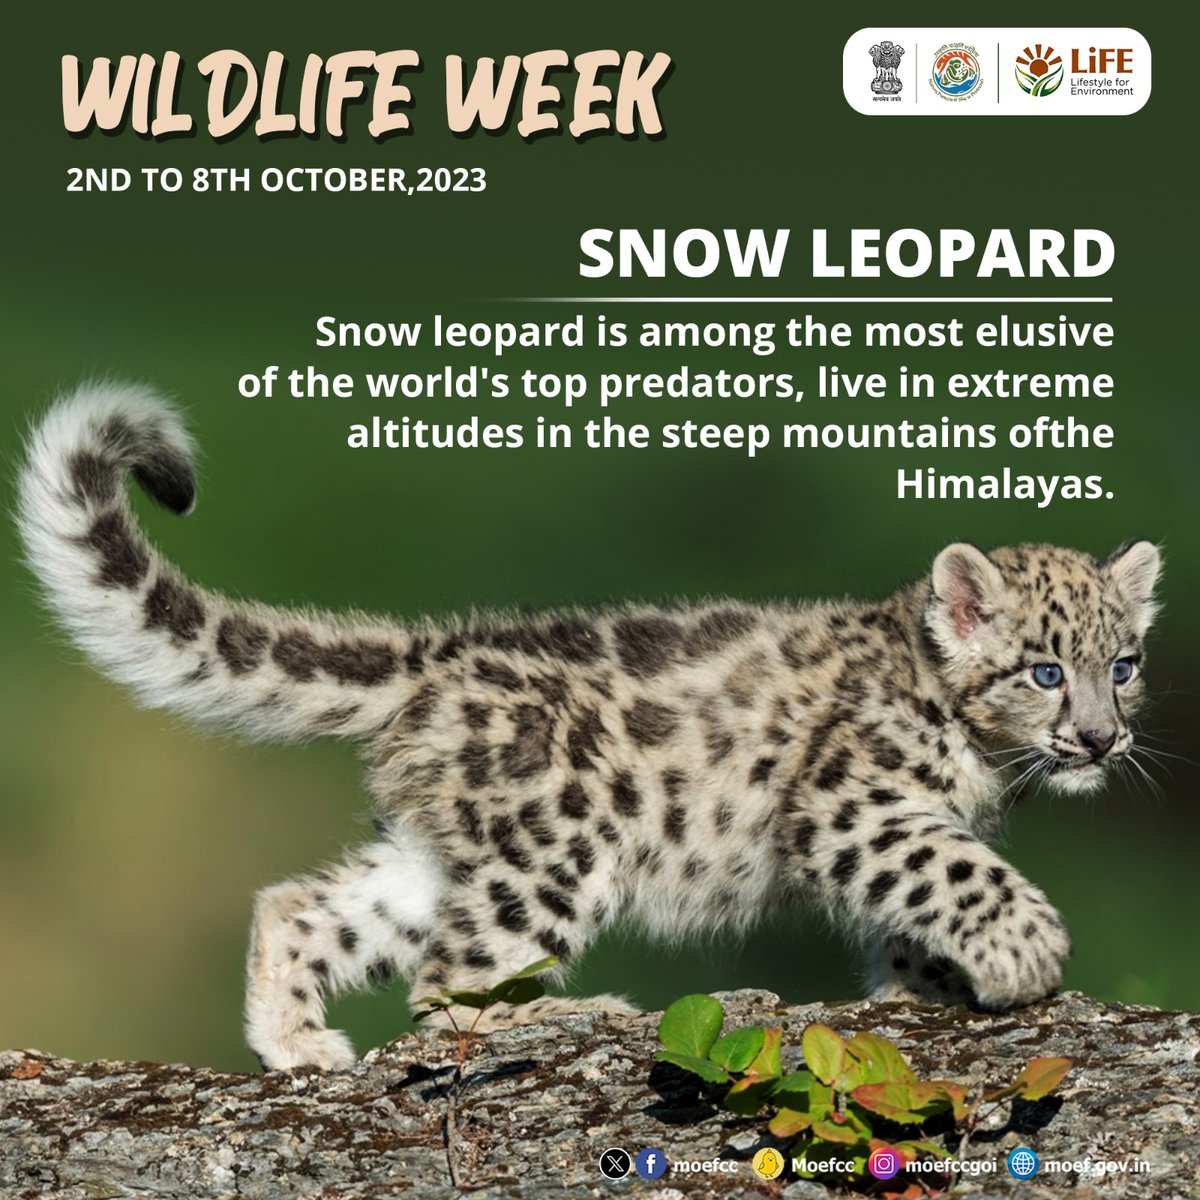 Snow Leopard: Elusive and beautiful big cats!
#WildlifeWeek2023